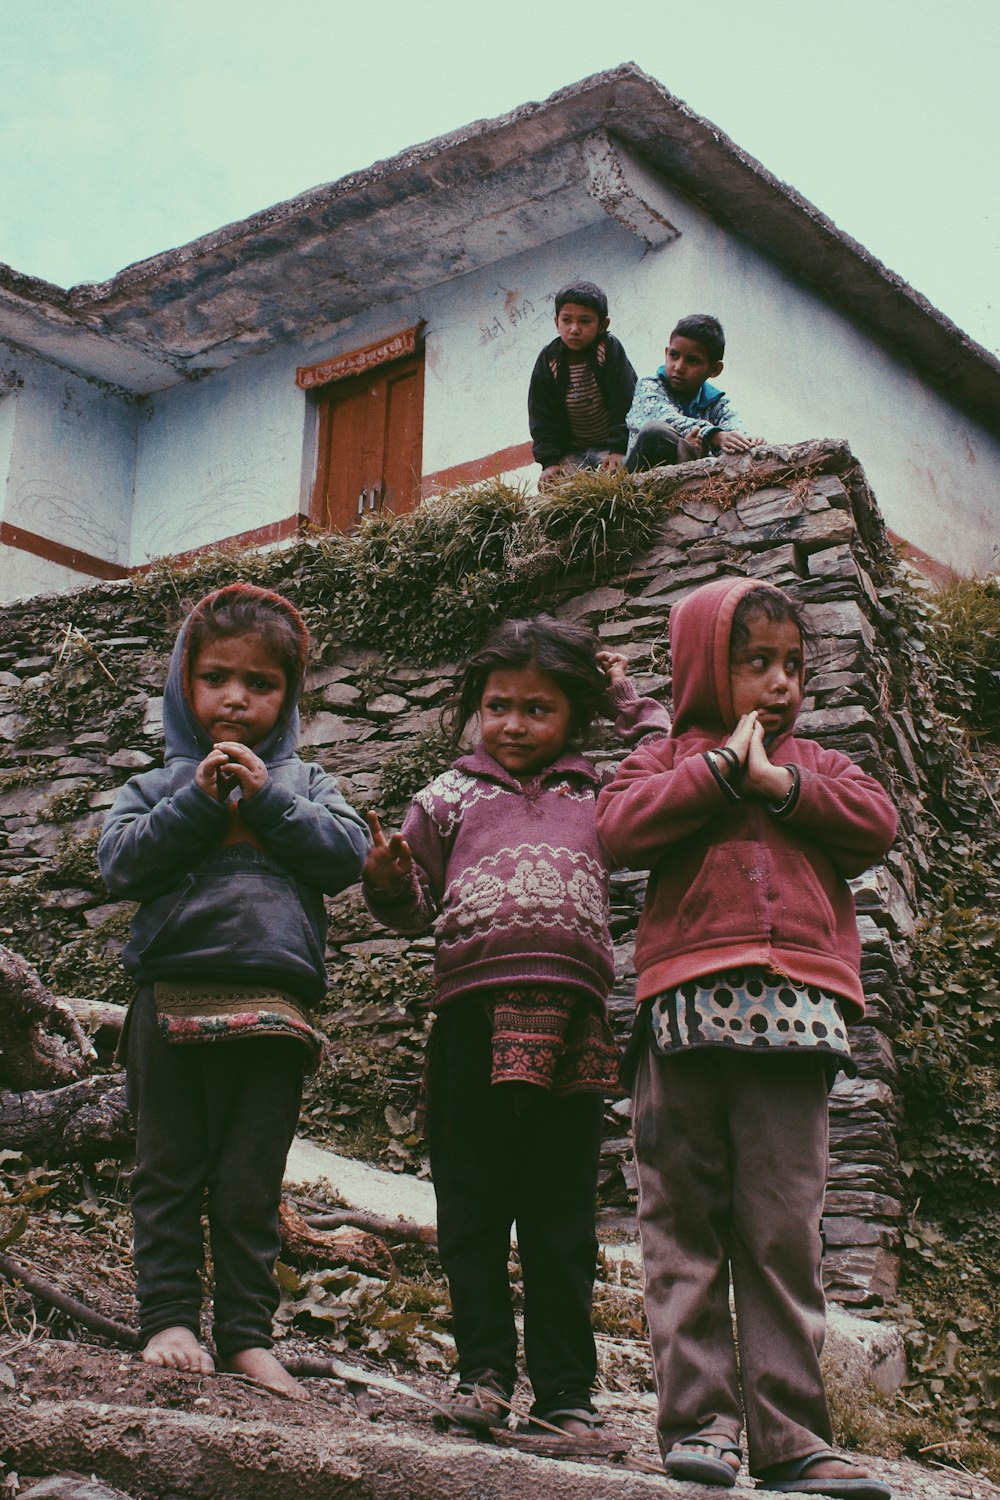 group of children standing near house